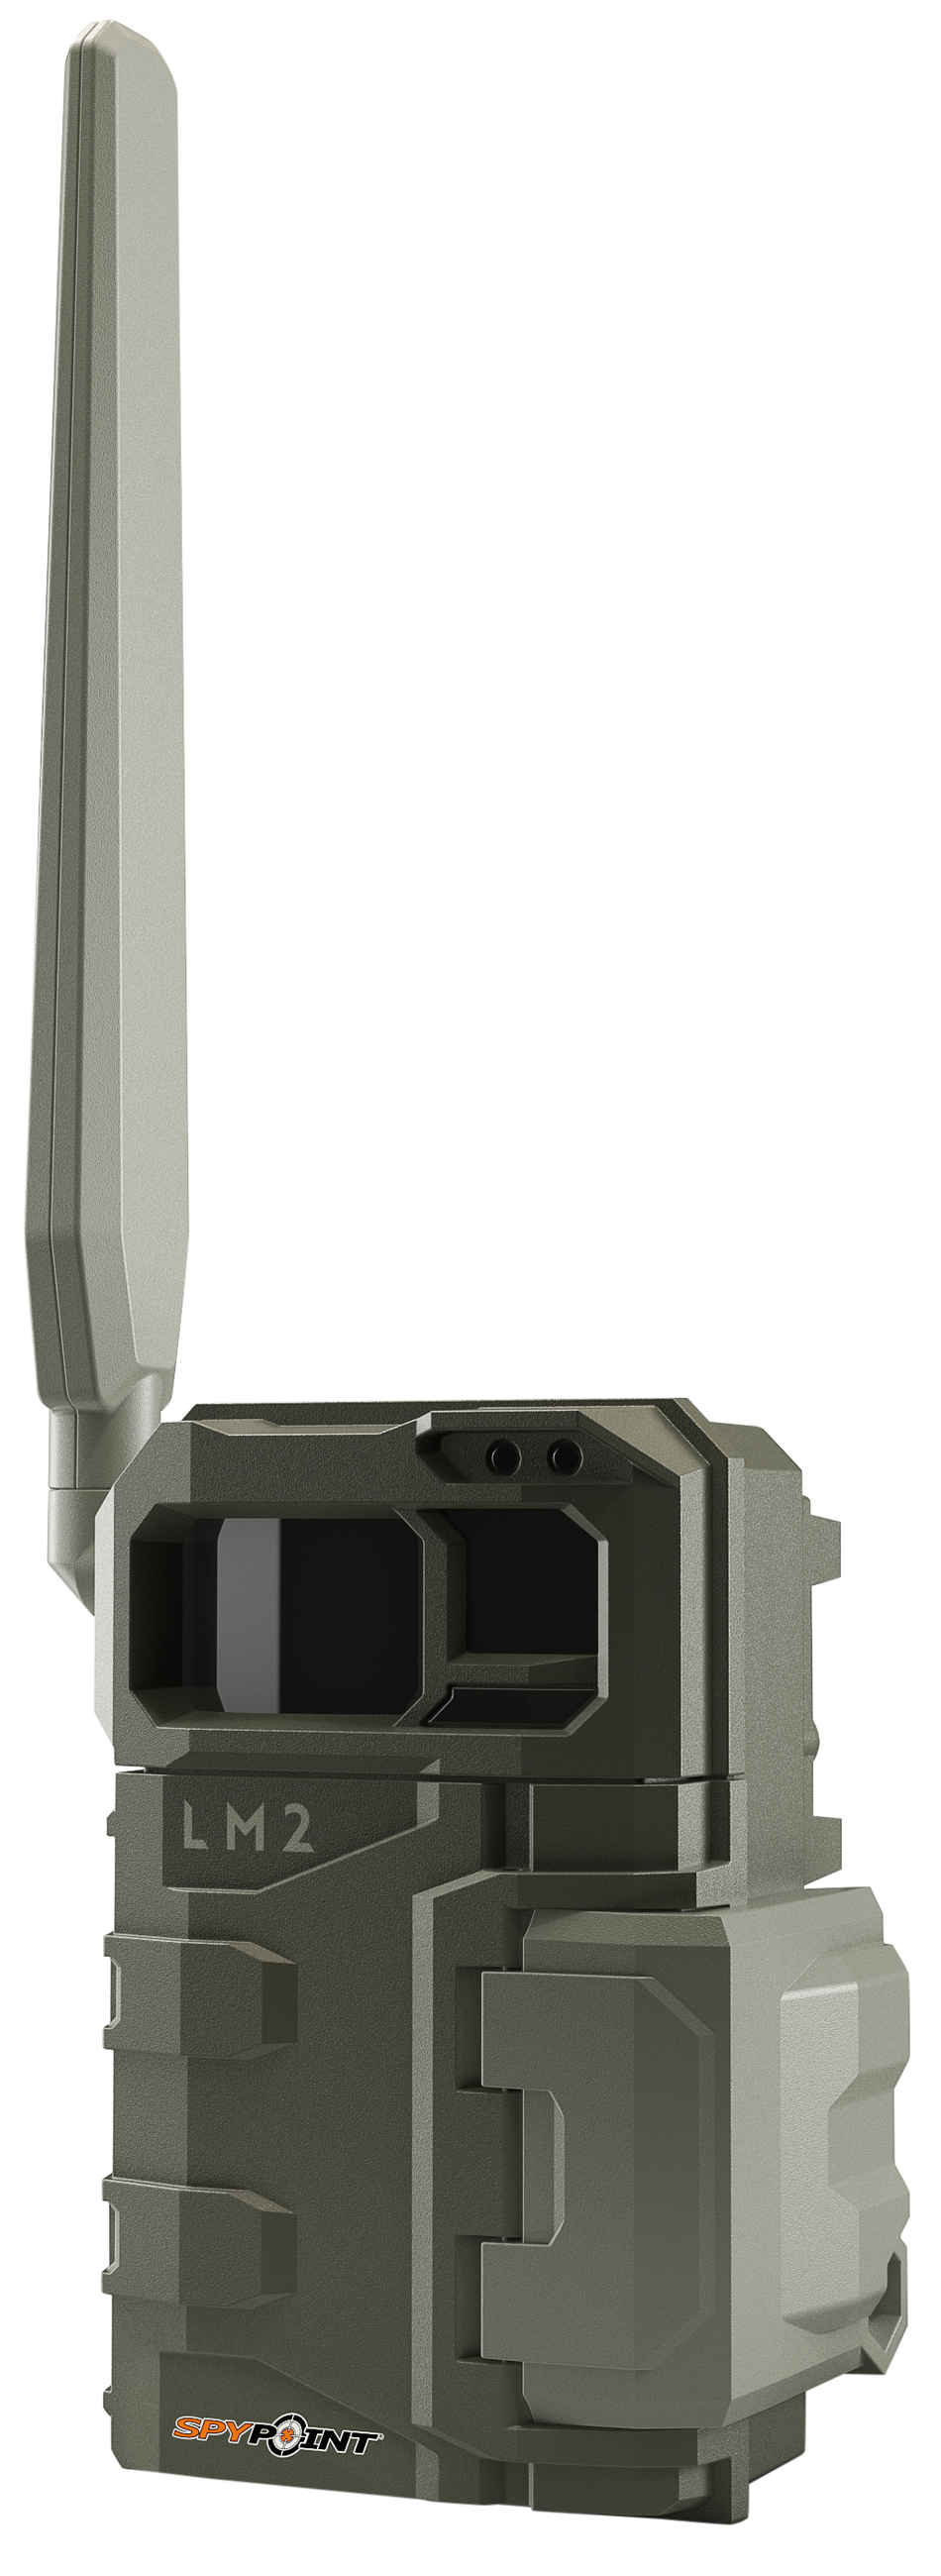 Spypoint LM2 Verizon Cellular Trail Camera LM2V